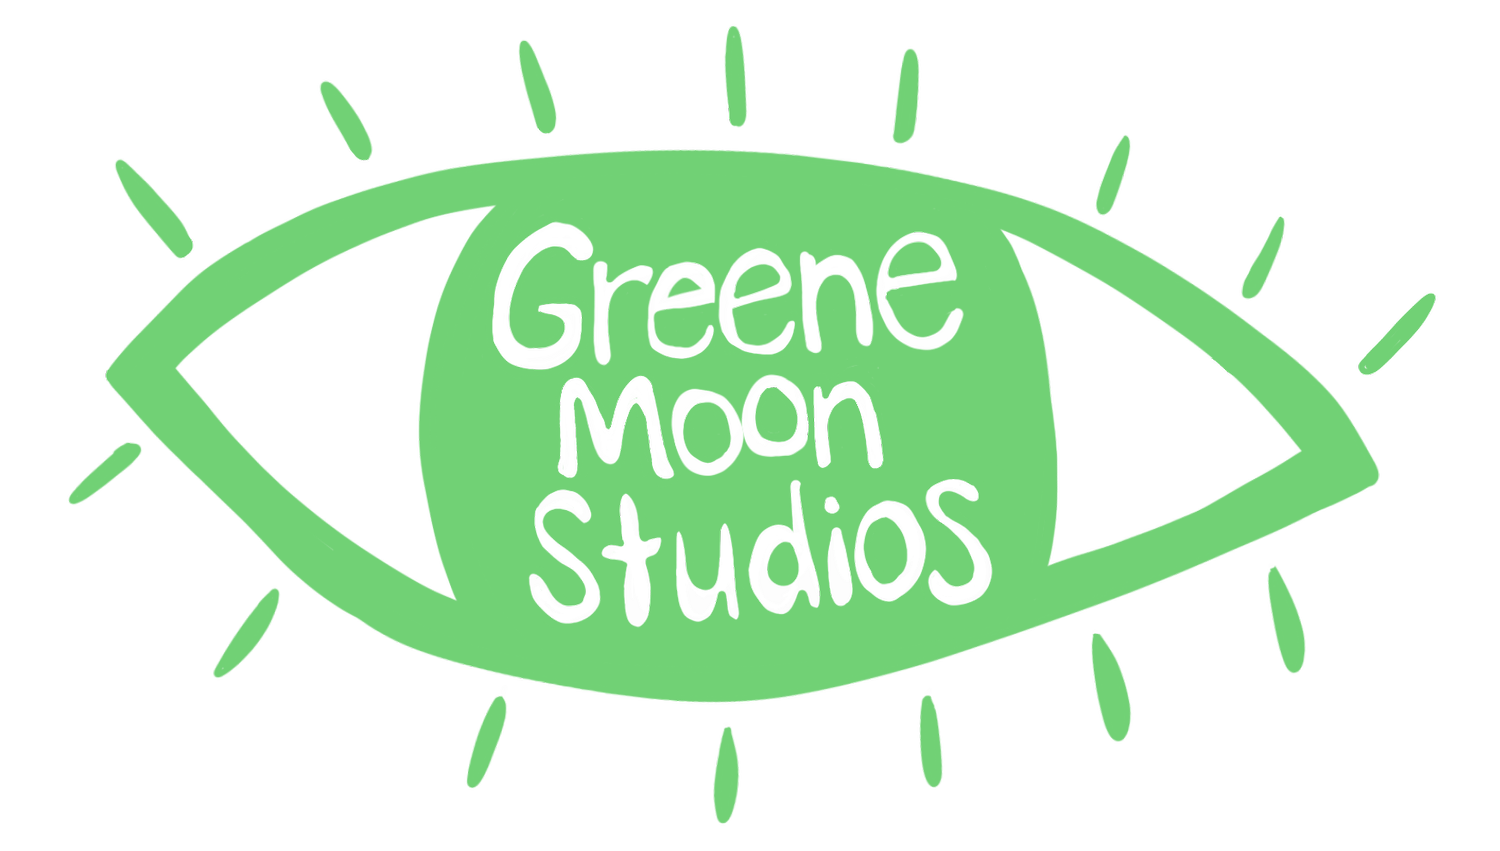 Greene Moon Studios